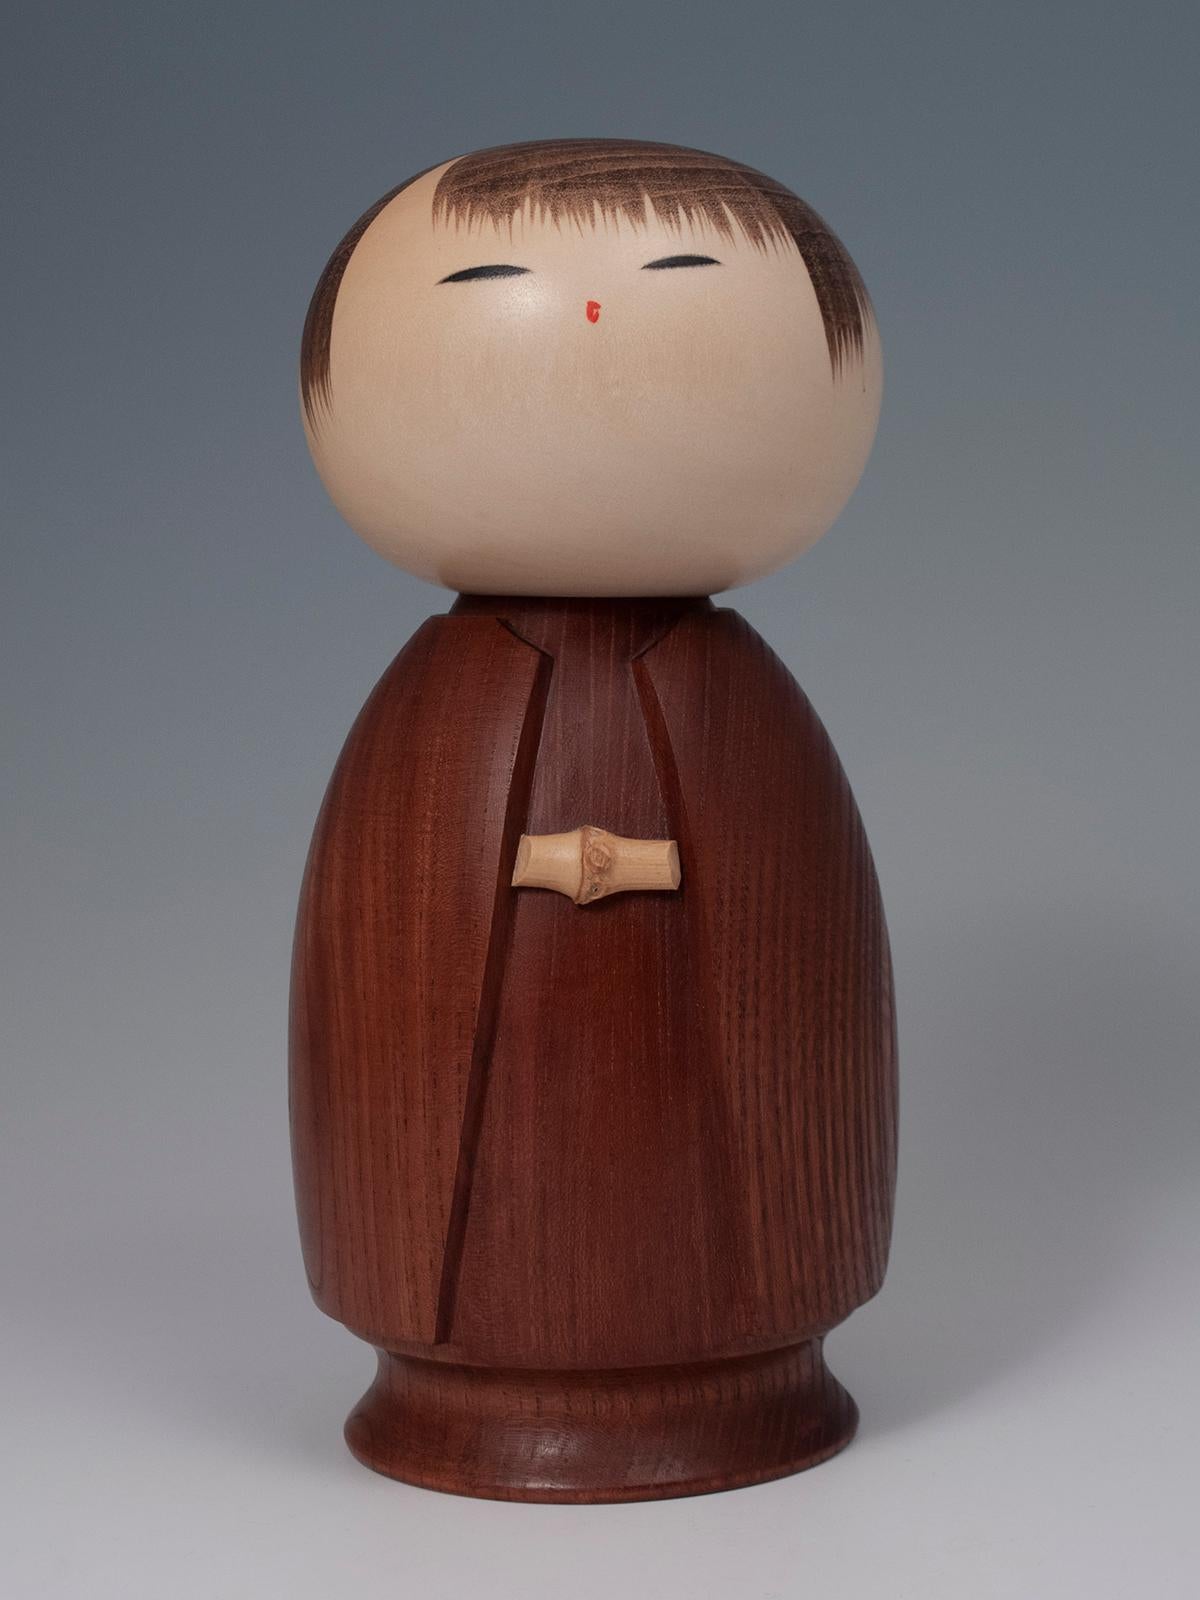 Rare Modern creative Kokeshi doll by Hideo Ishihara, Japan

The name of this kokeshi is Samui Asa, which translates as 